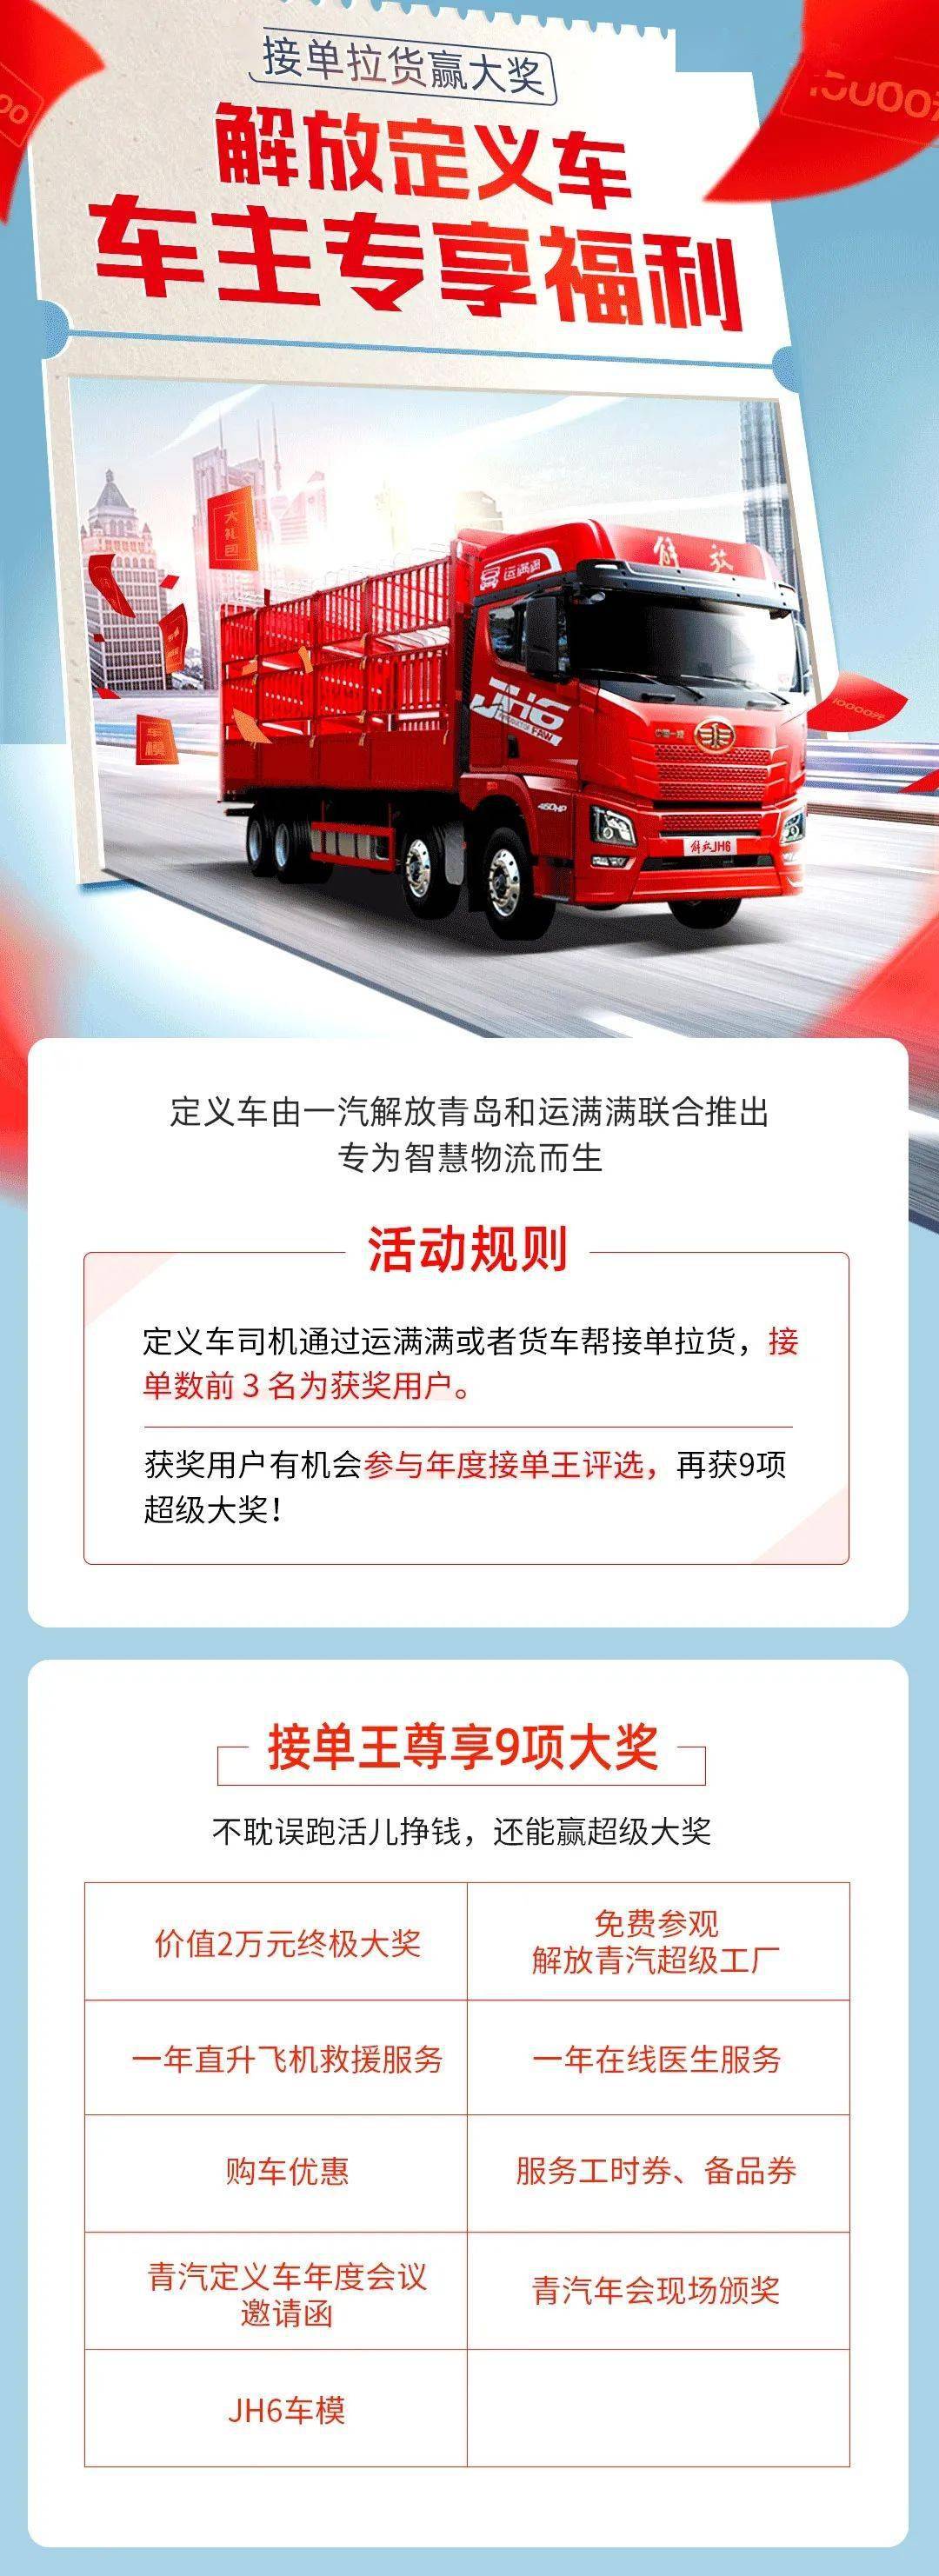 jh6牵引车/jh6载货车/龙v(h)载货车 厂家金融2年0利率 置换最高4000